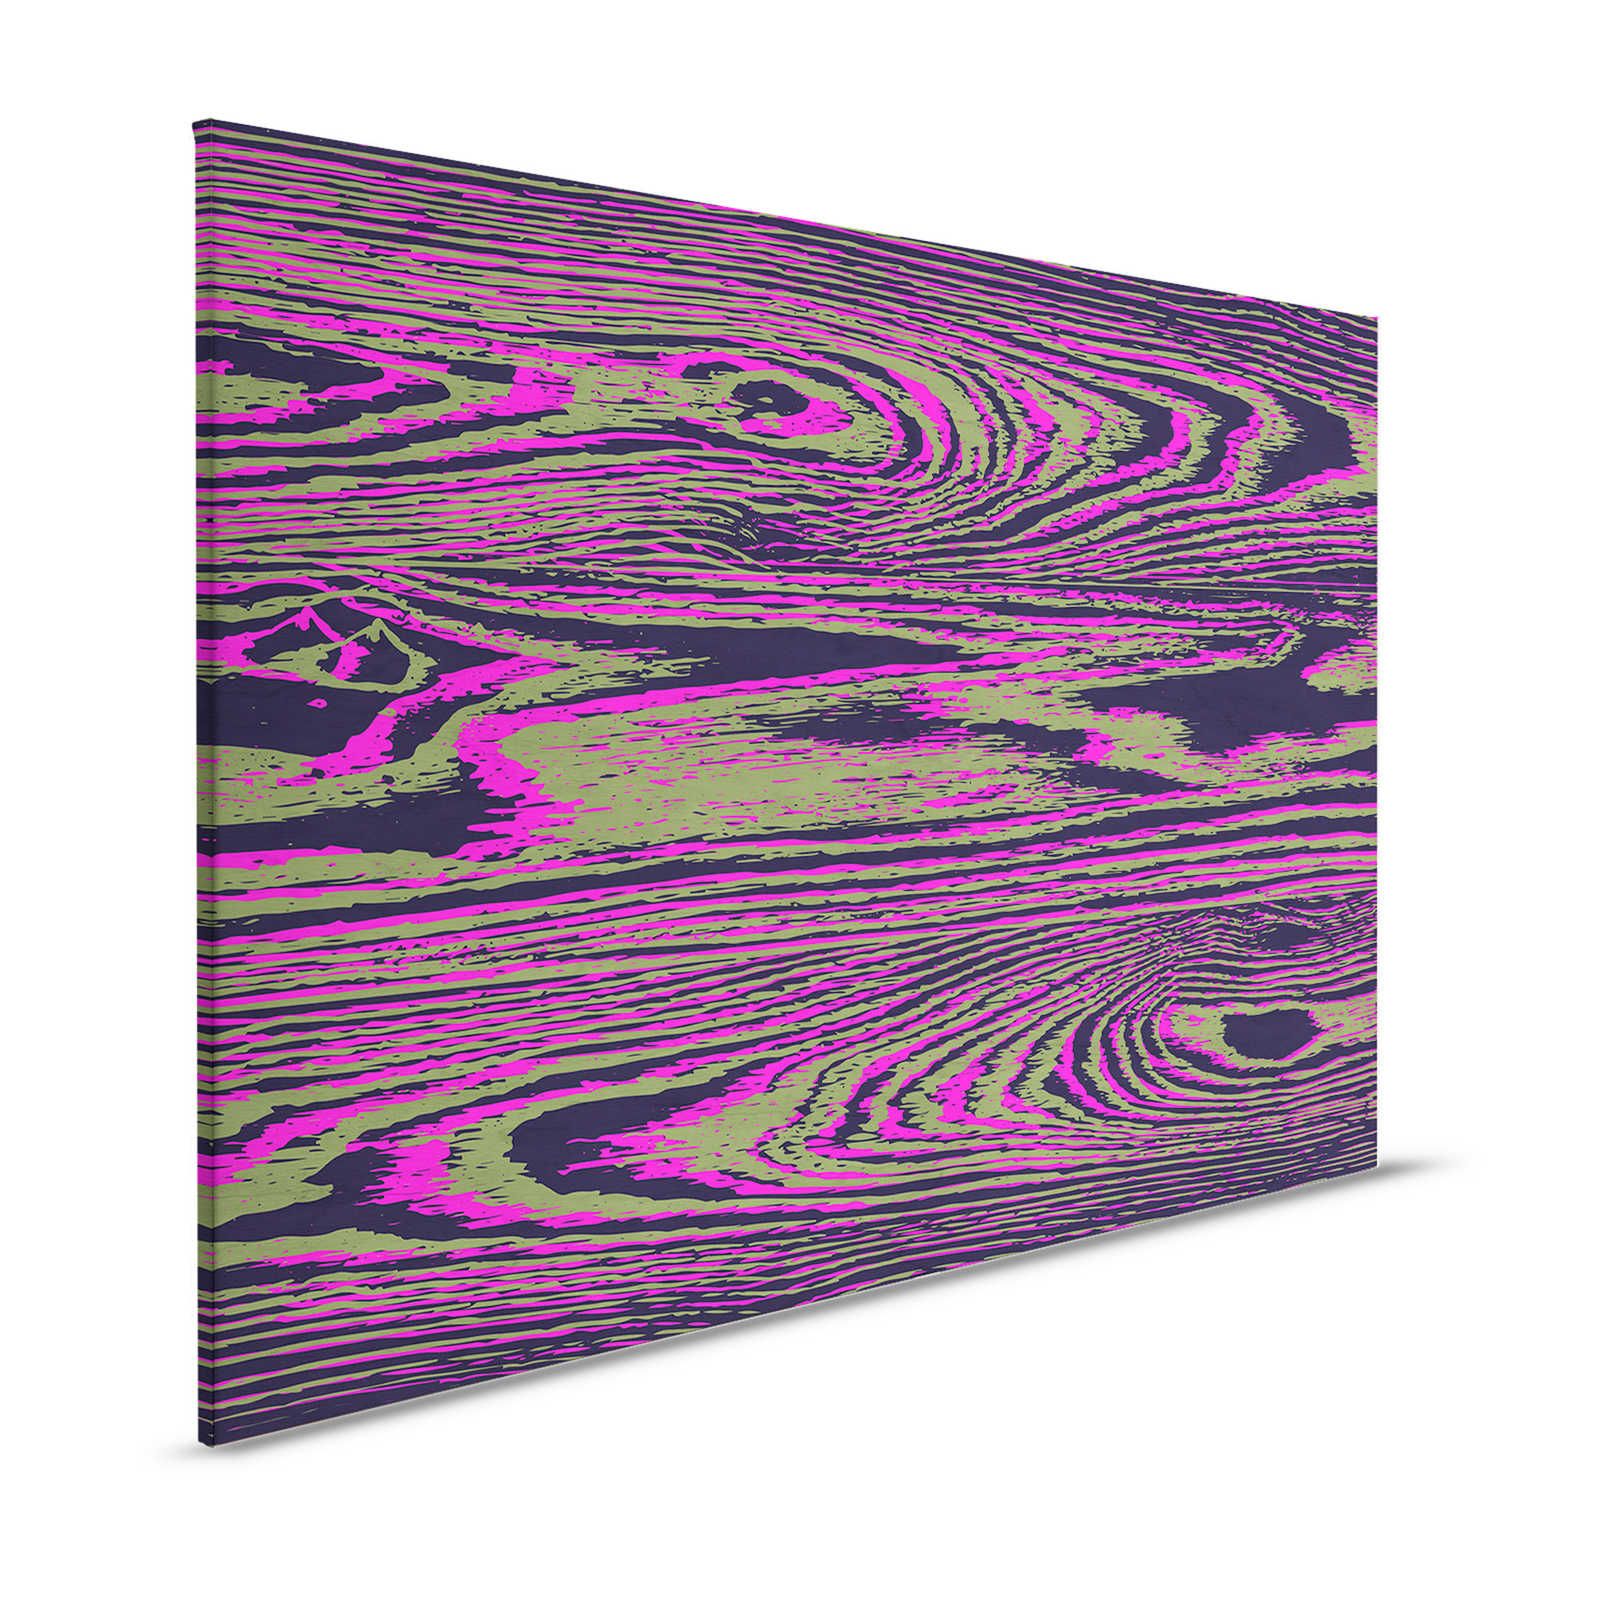 Kontiki 2 - Pintura sobre lienzo Grano de madera neón, rosa y negro - 1,20 m x 0,80 m
